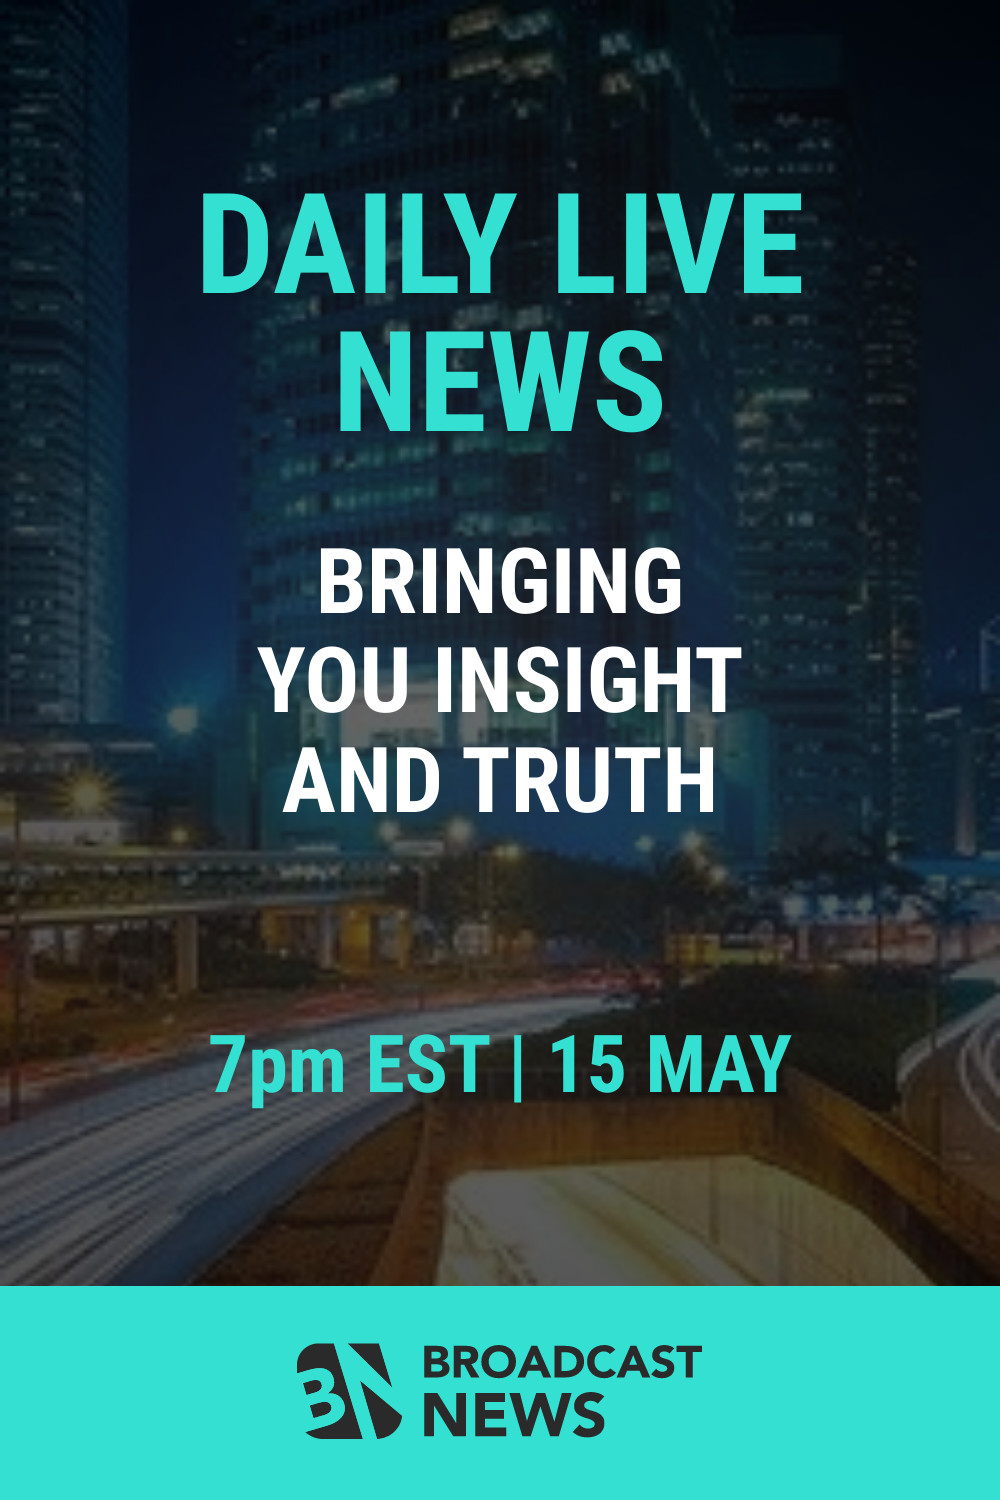 Daily Live Broadcast News